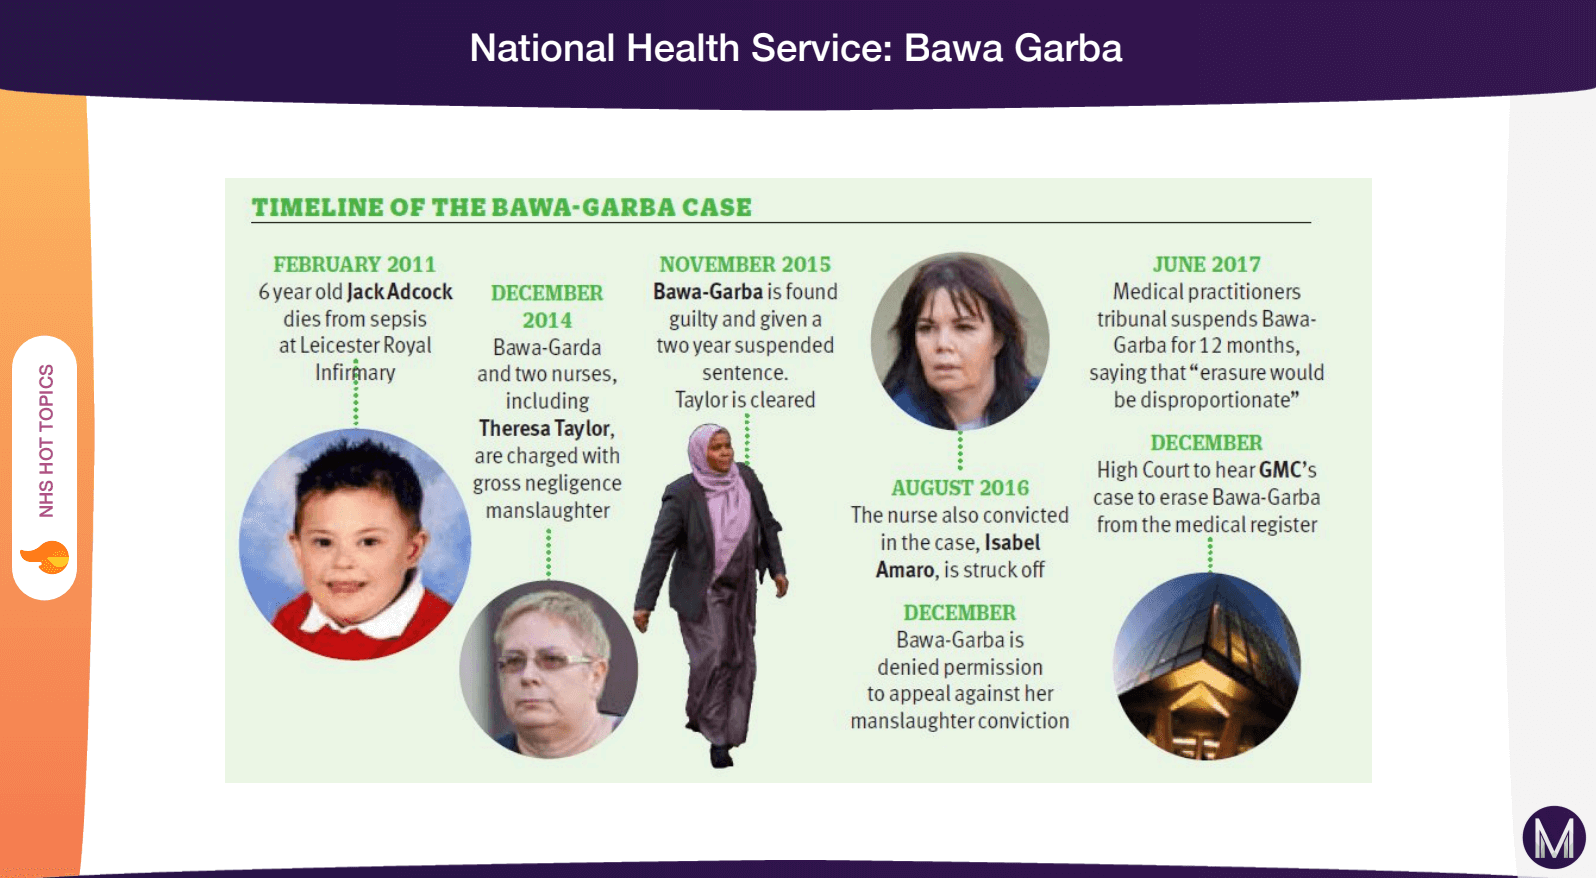 Dr Bawa-Garba